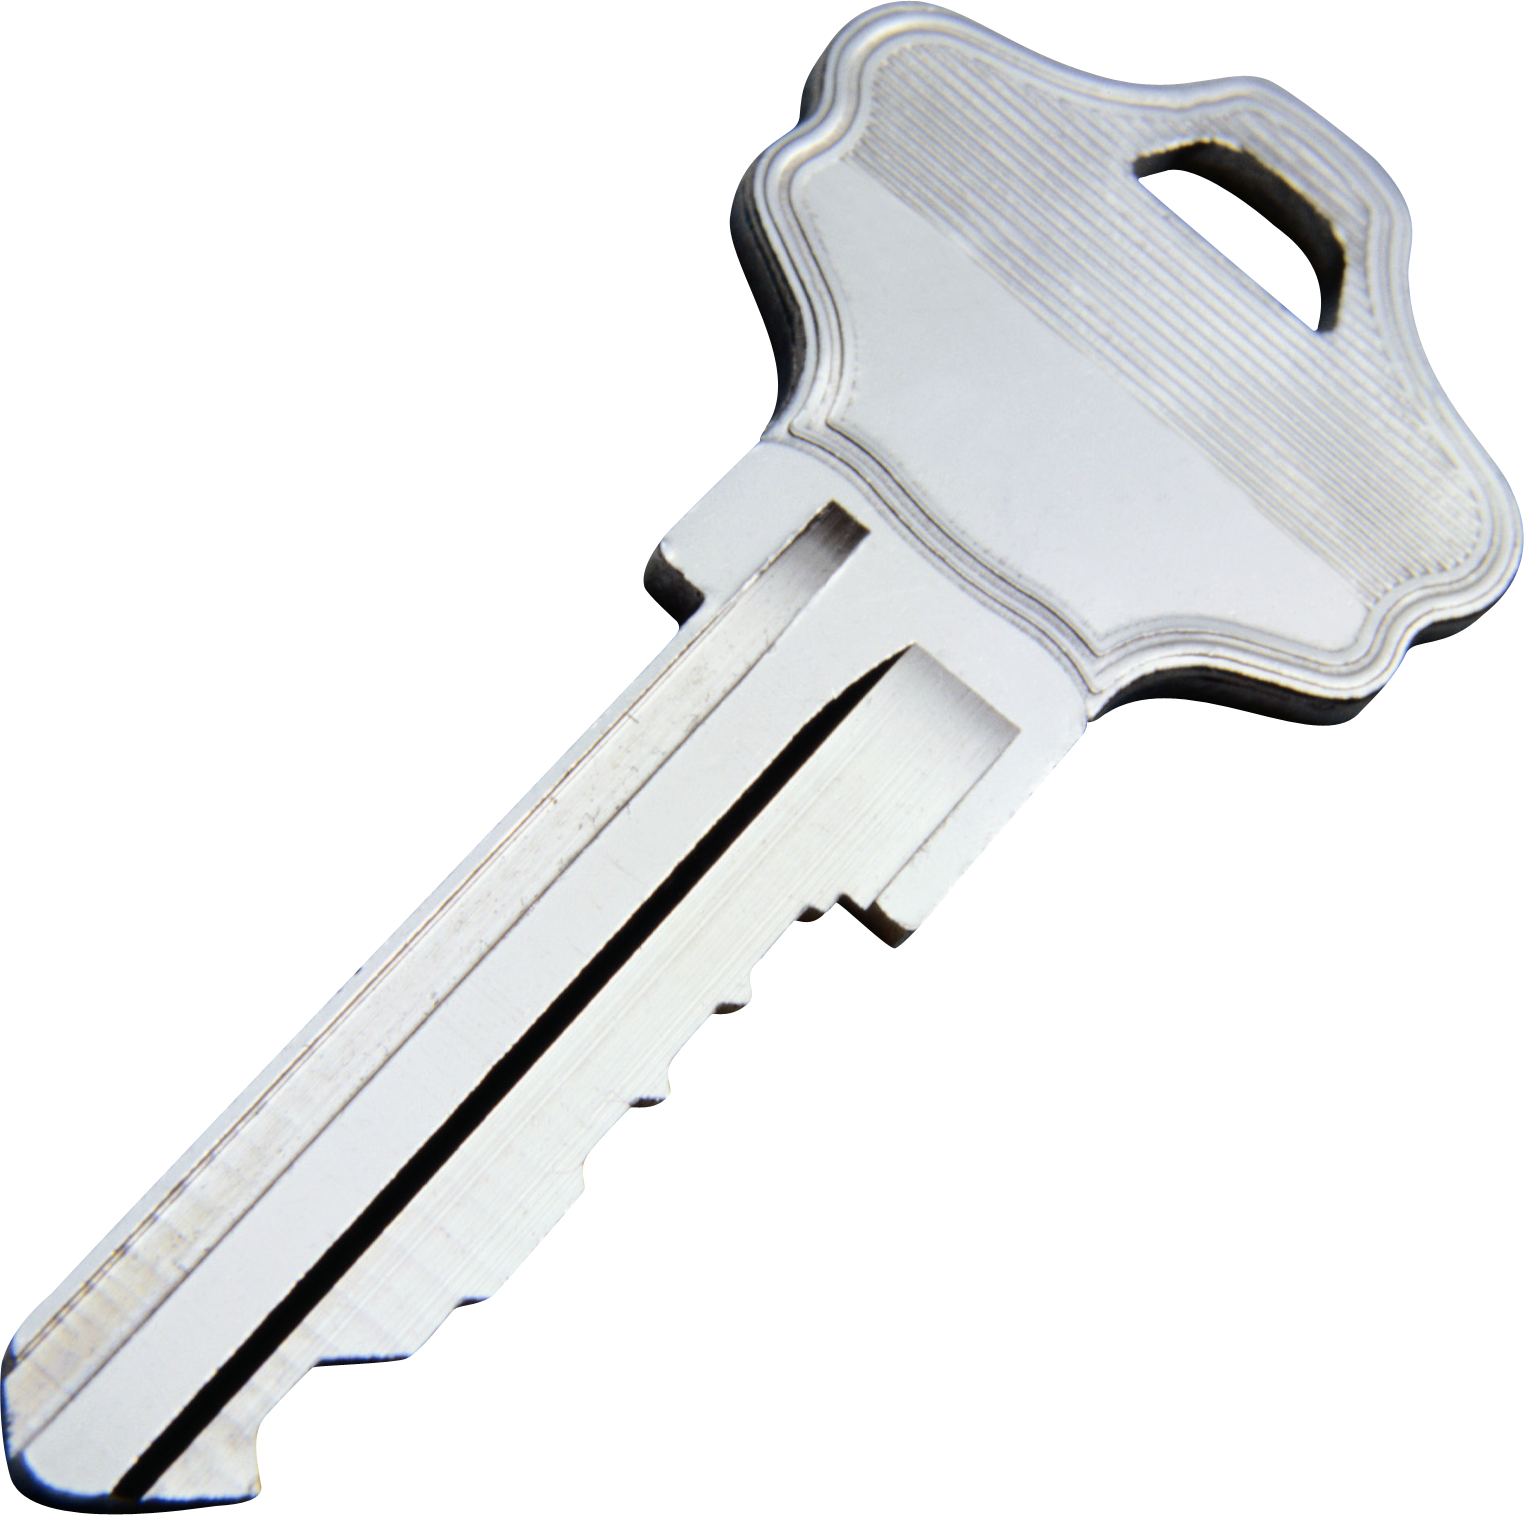 Similar Lock Keys Facts PNG I